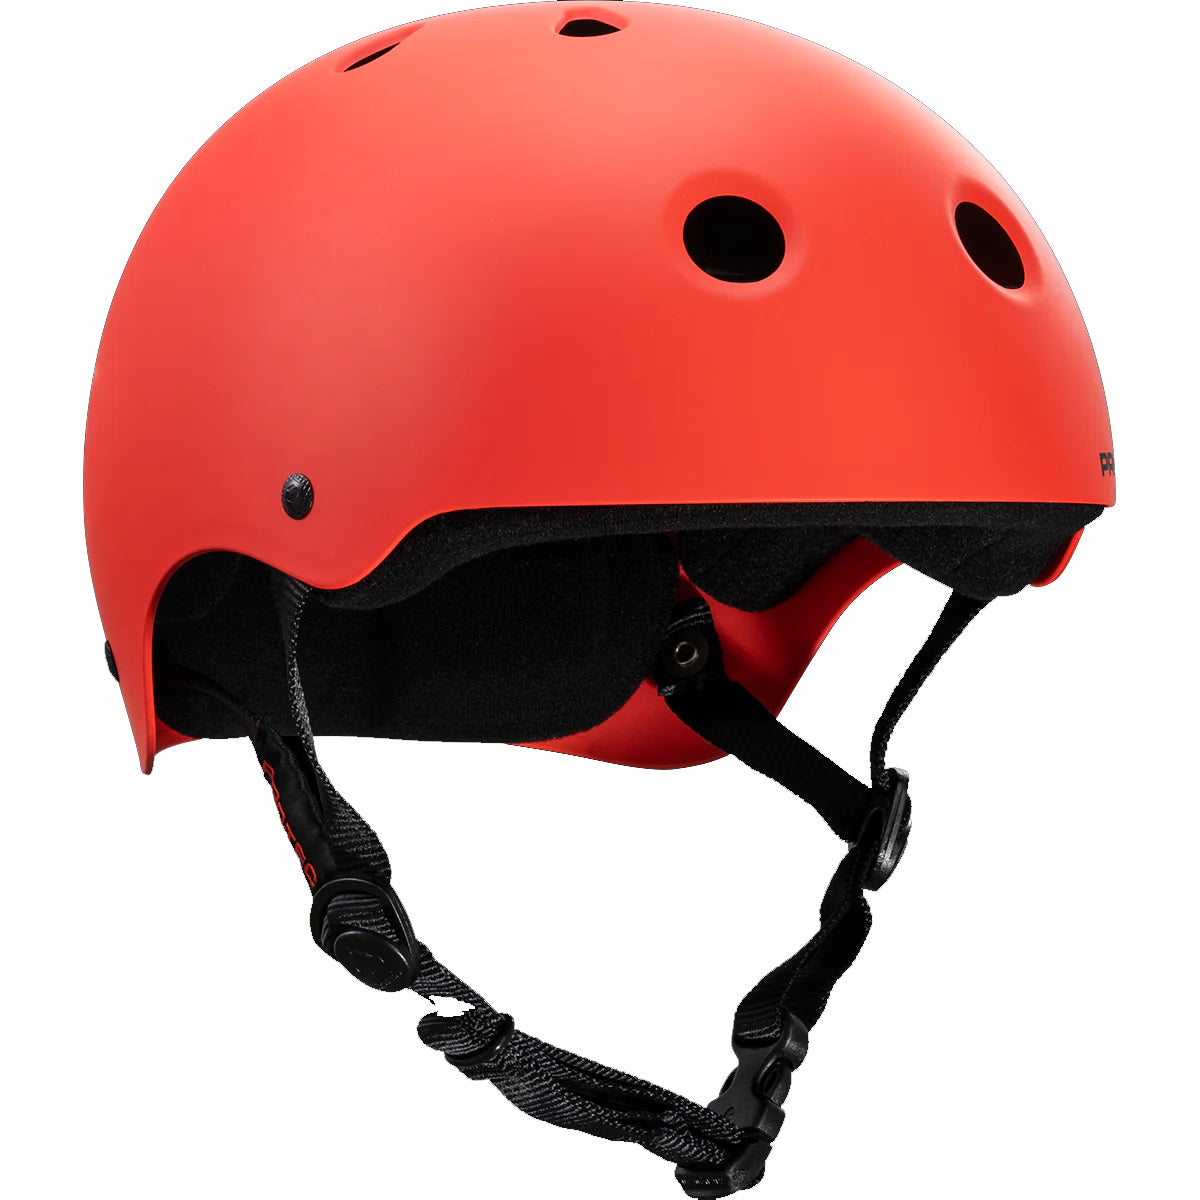 Protec Classic Matte Bright Red Skate Helmet